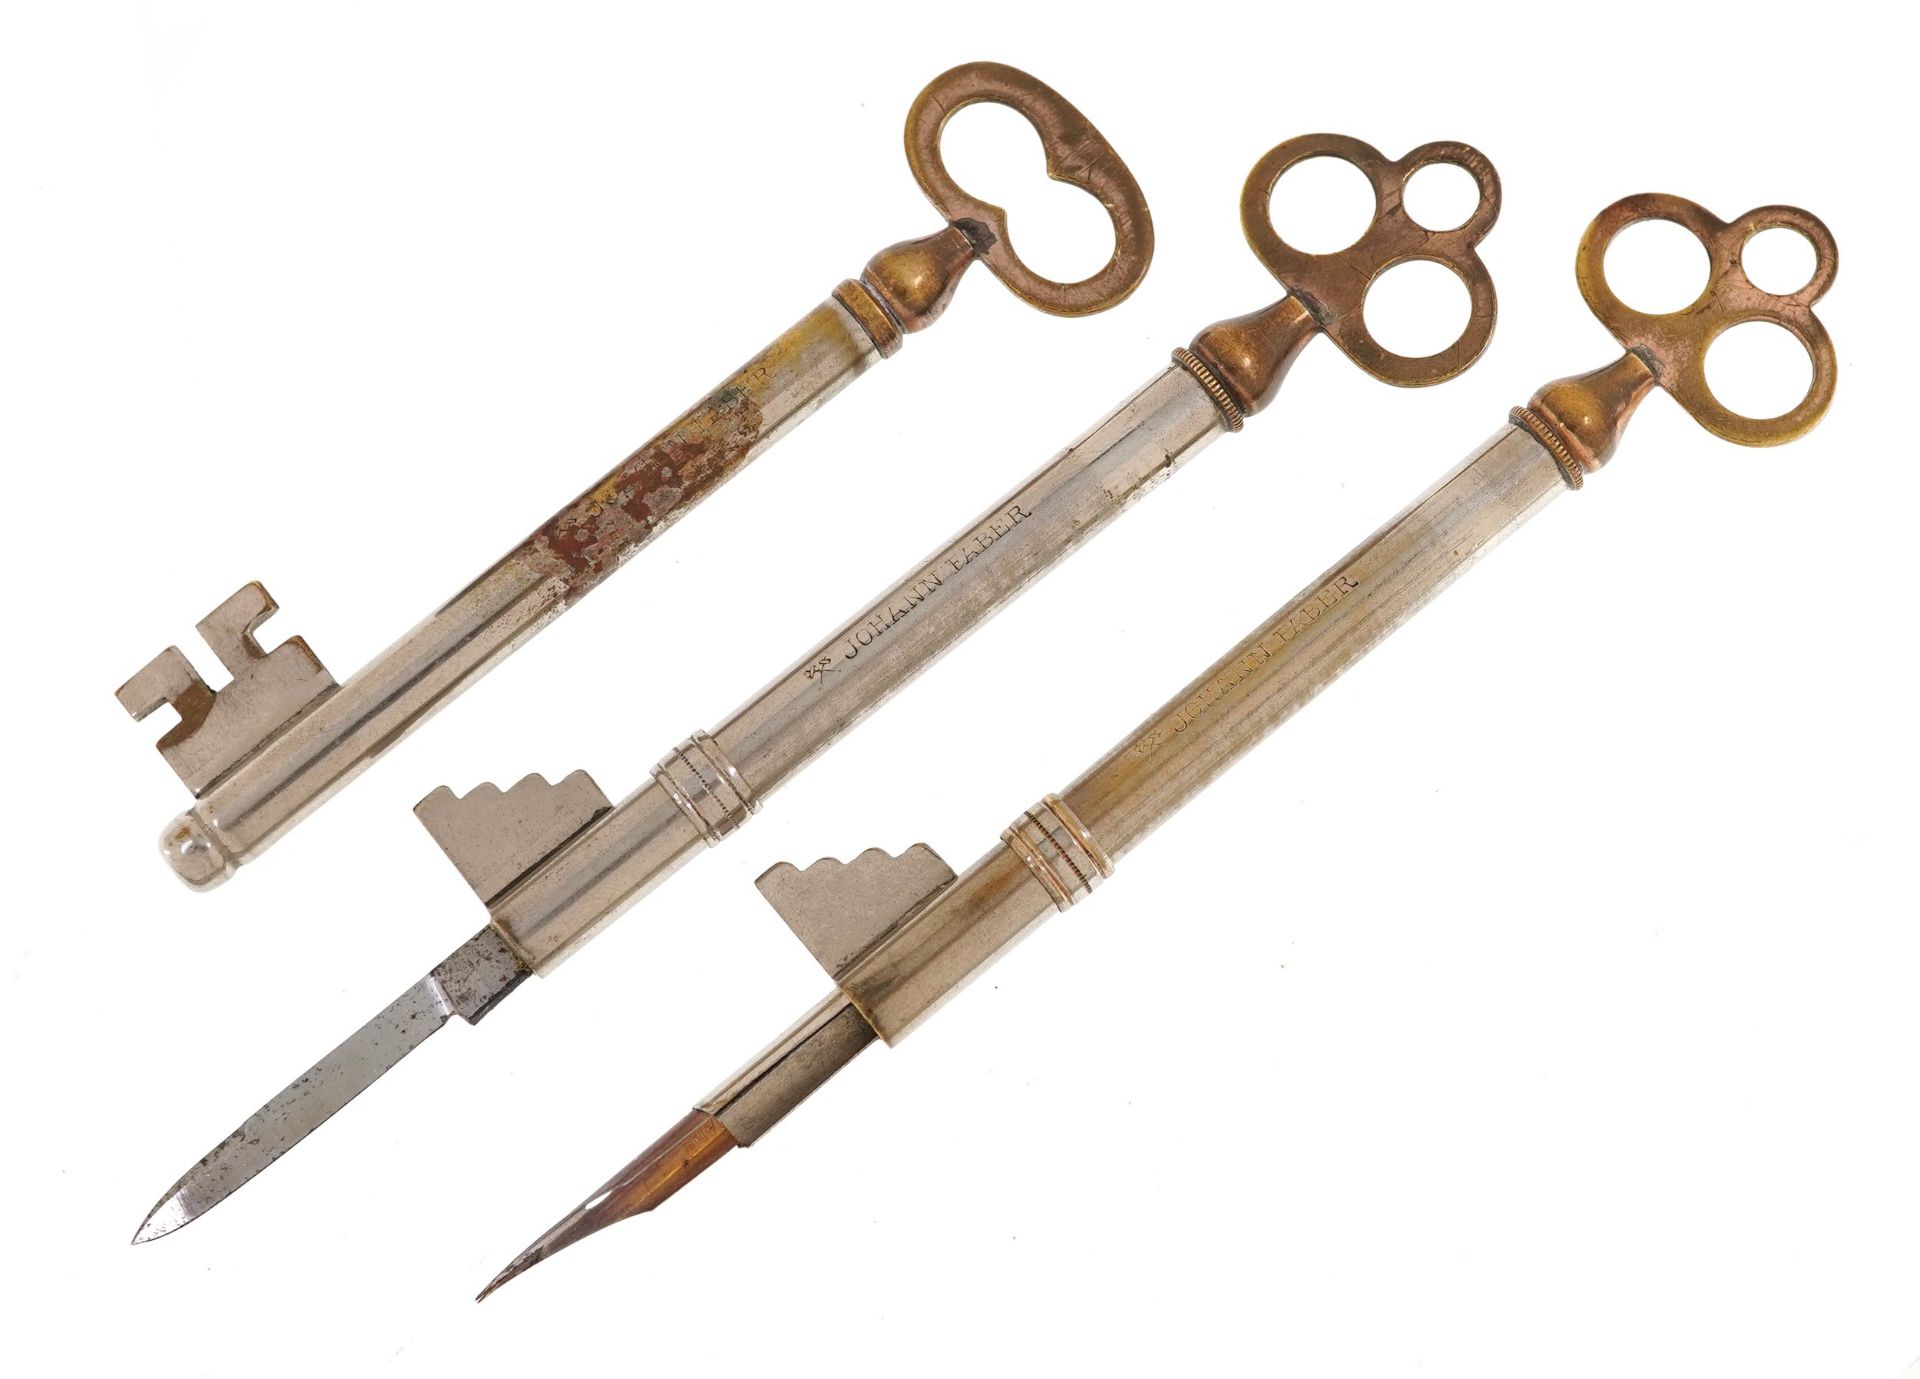 Johann Faber, novelty German key design dip pen, penknife and propelling pencil, each 9.5cm in